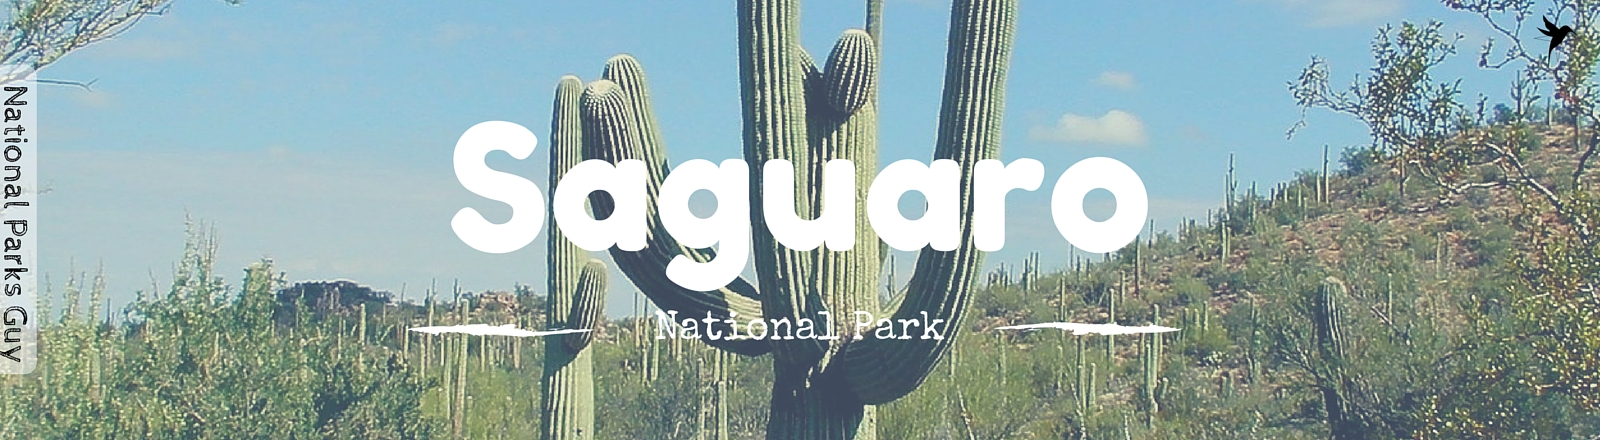 Saguaro National Park, USA, National Parks Guy, Stories, Tales, Adventures, Wildlife